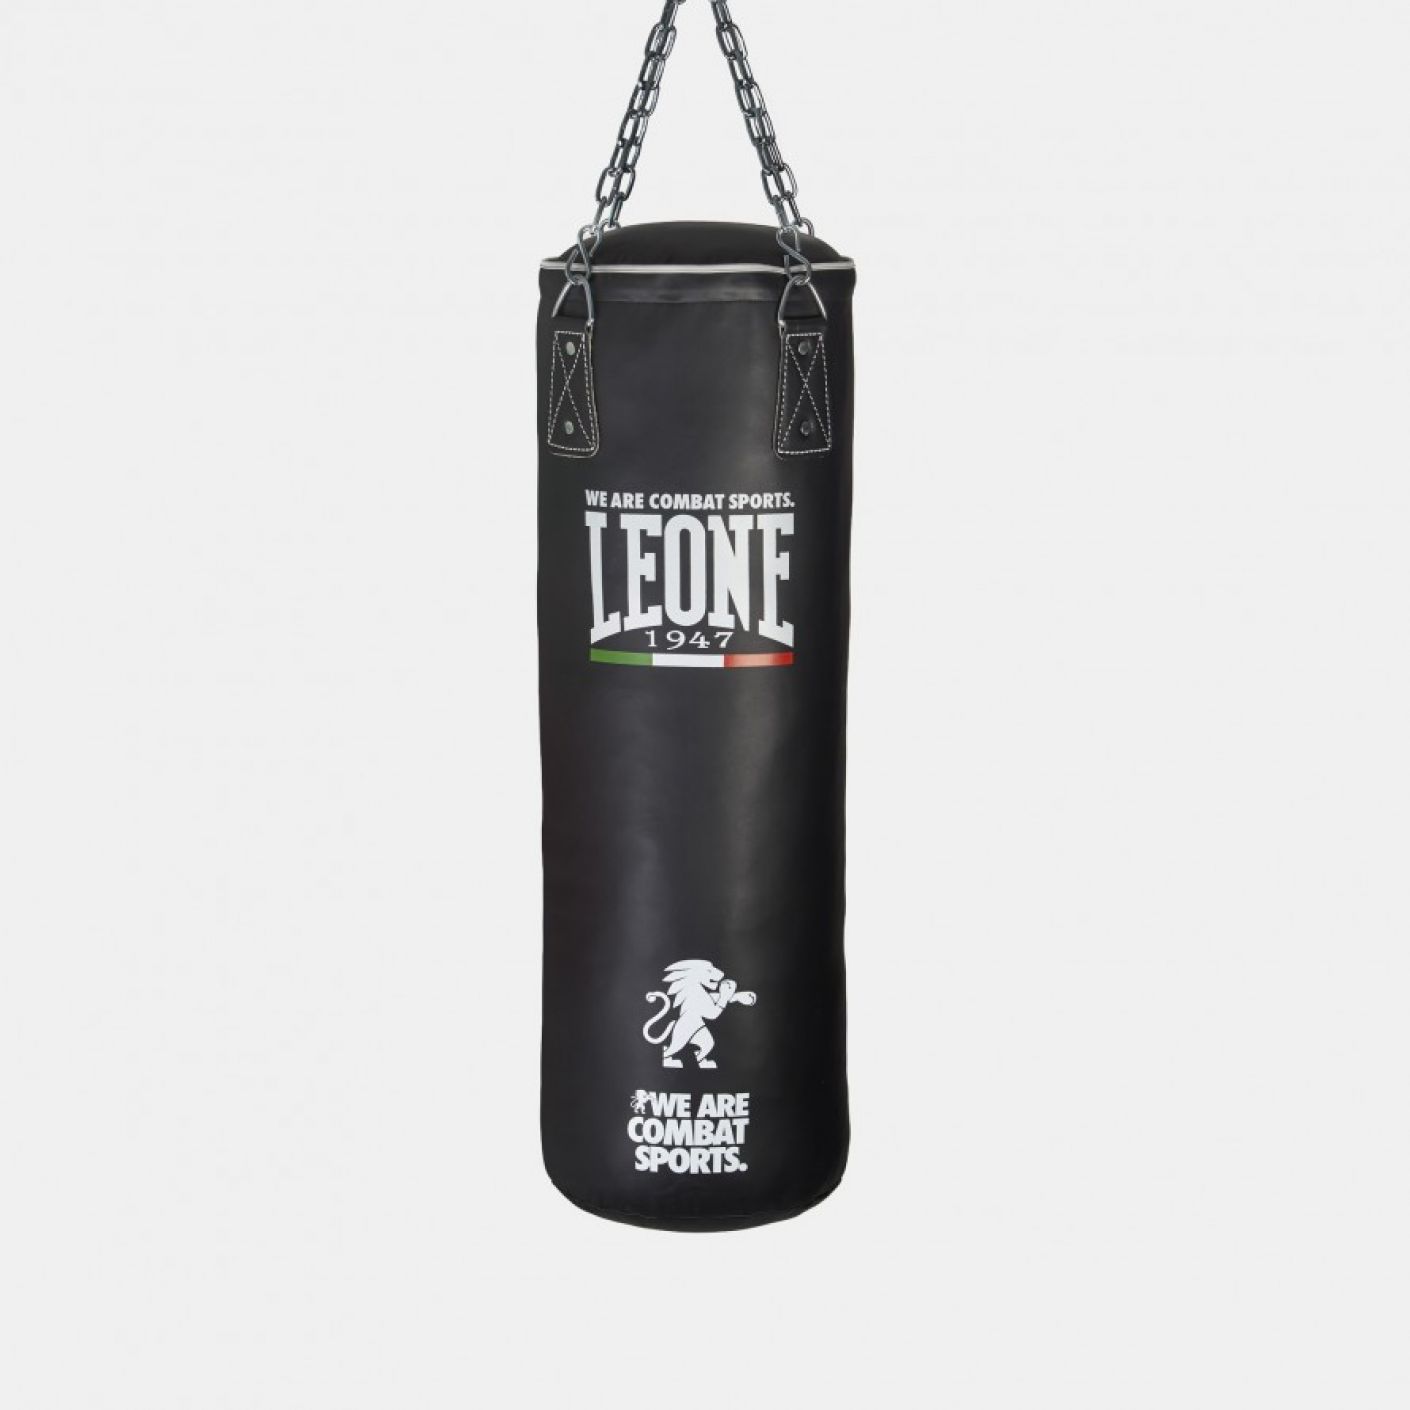 Leone Basic Boxing Bag 30 Kg Black